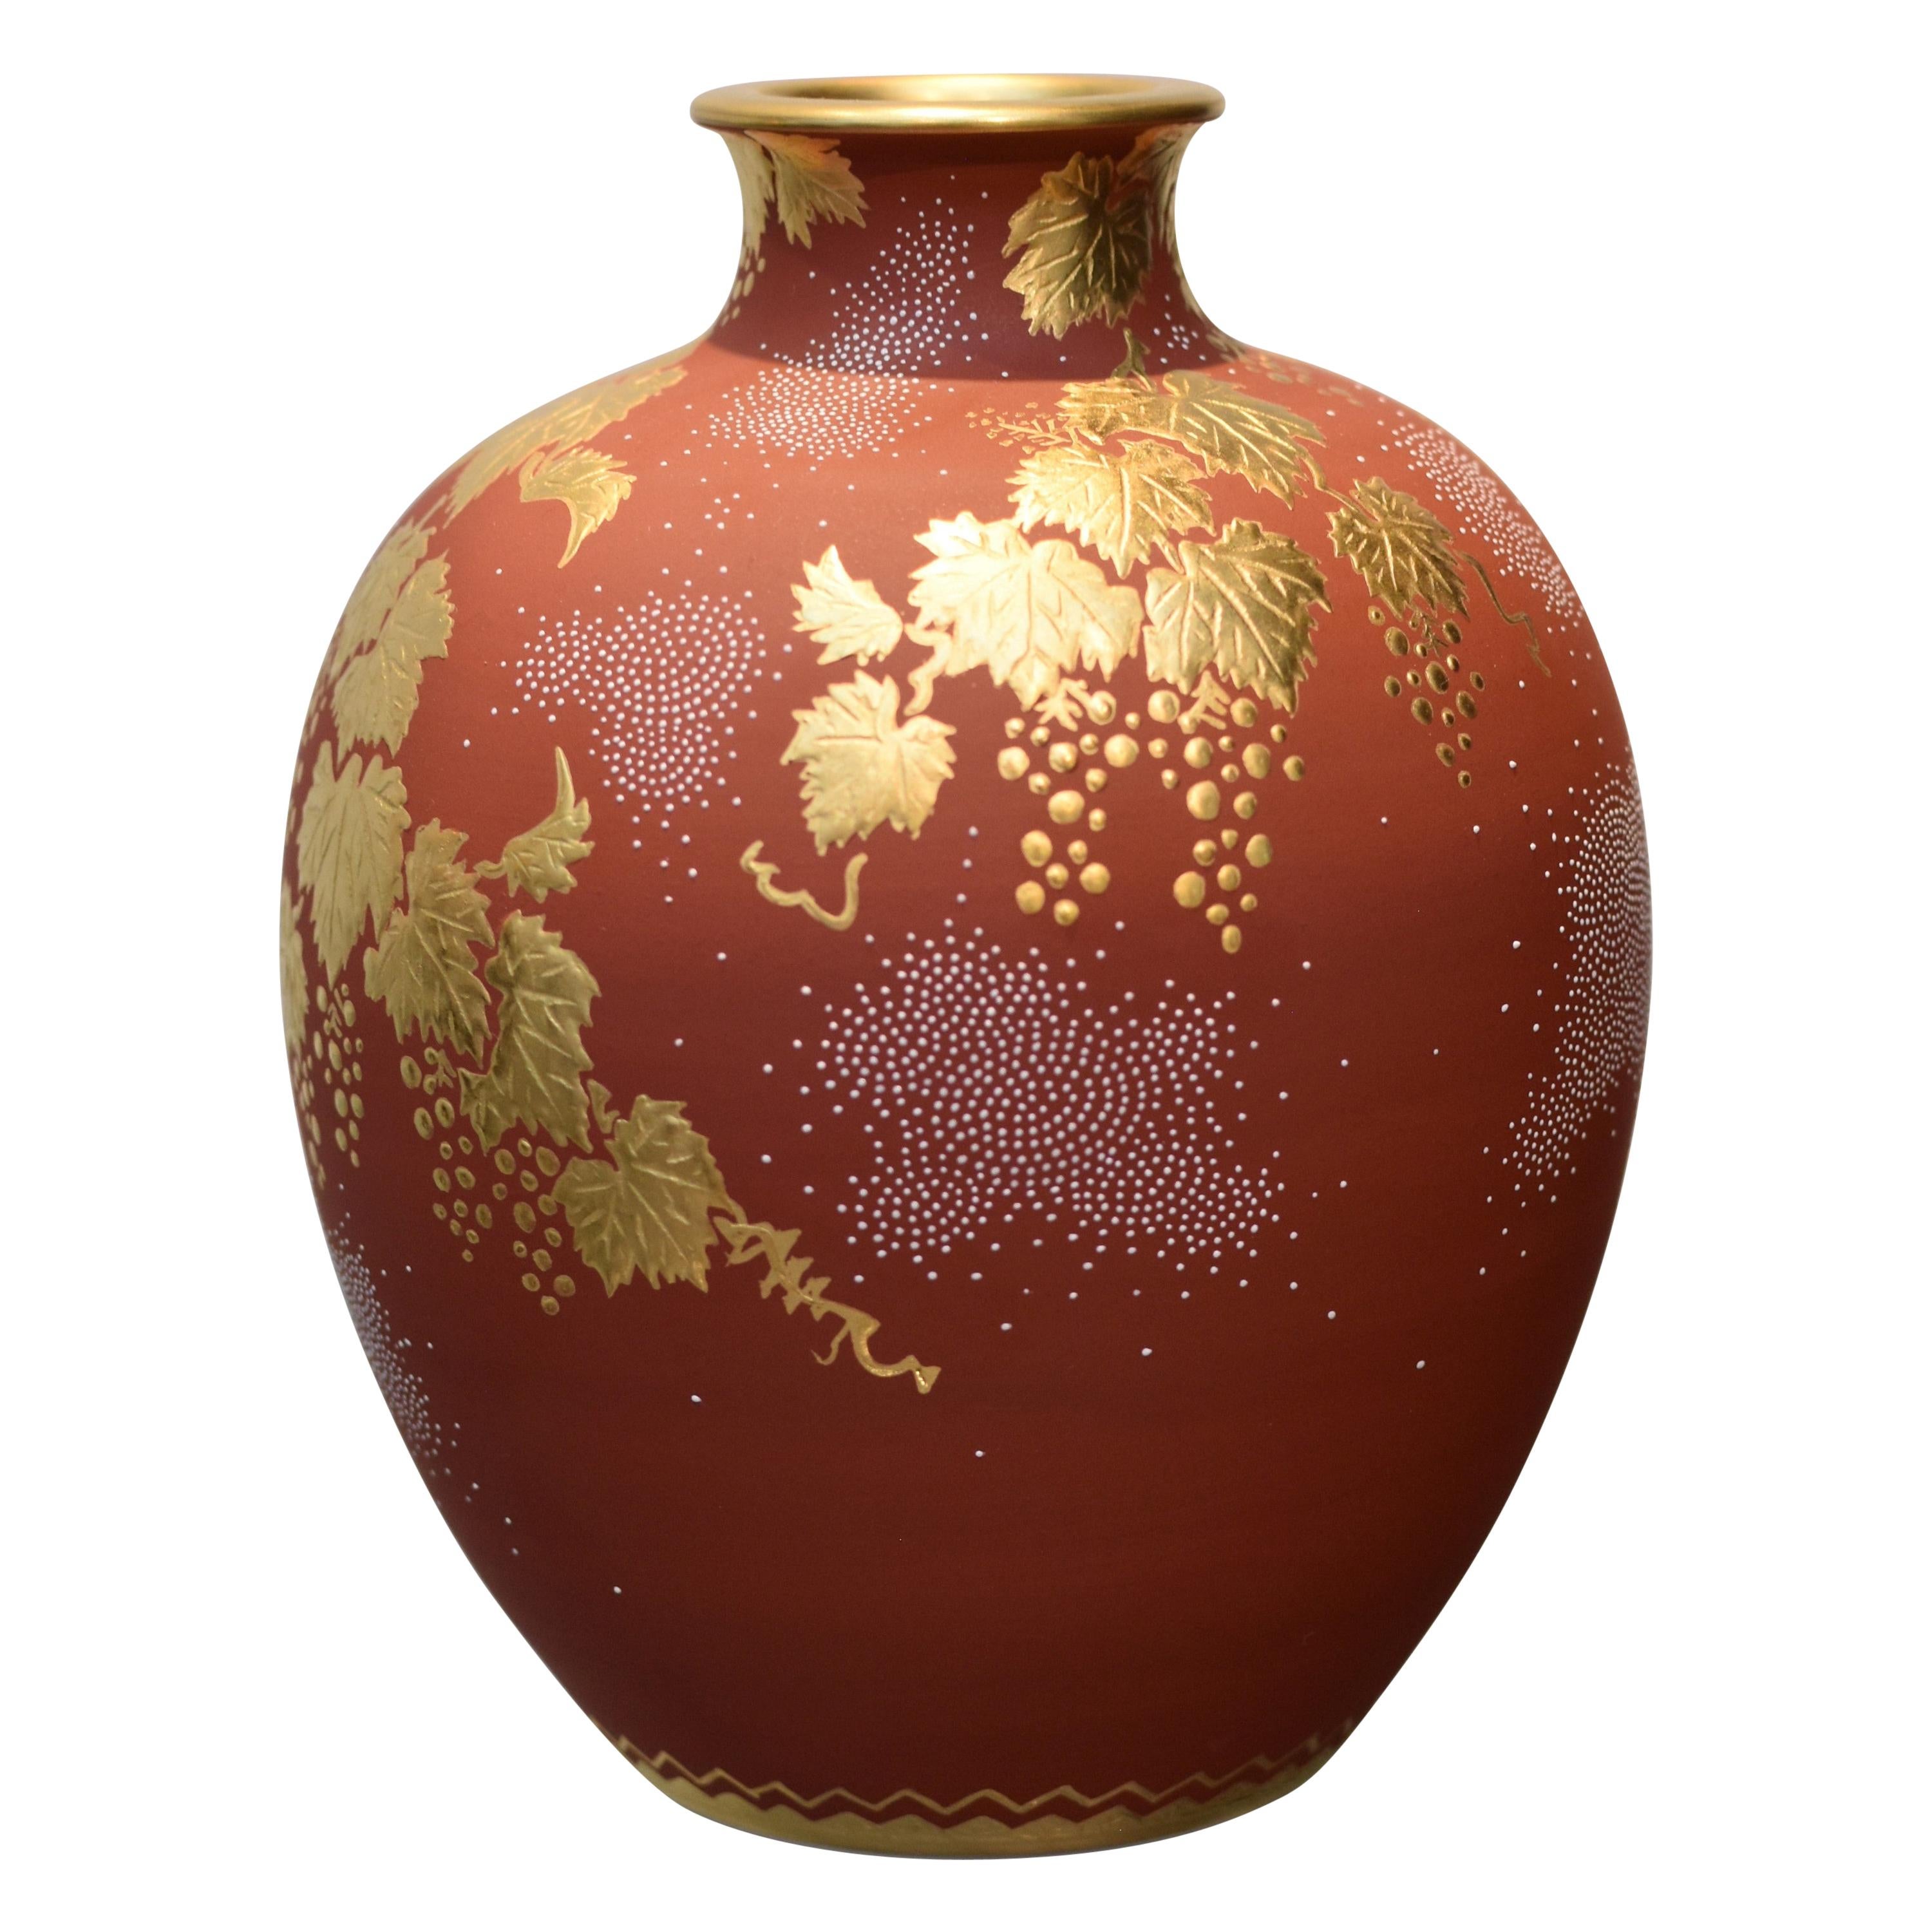 Kutani vase with vibrant flower motif and signed